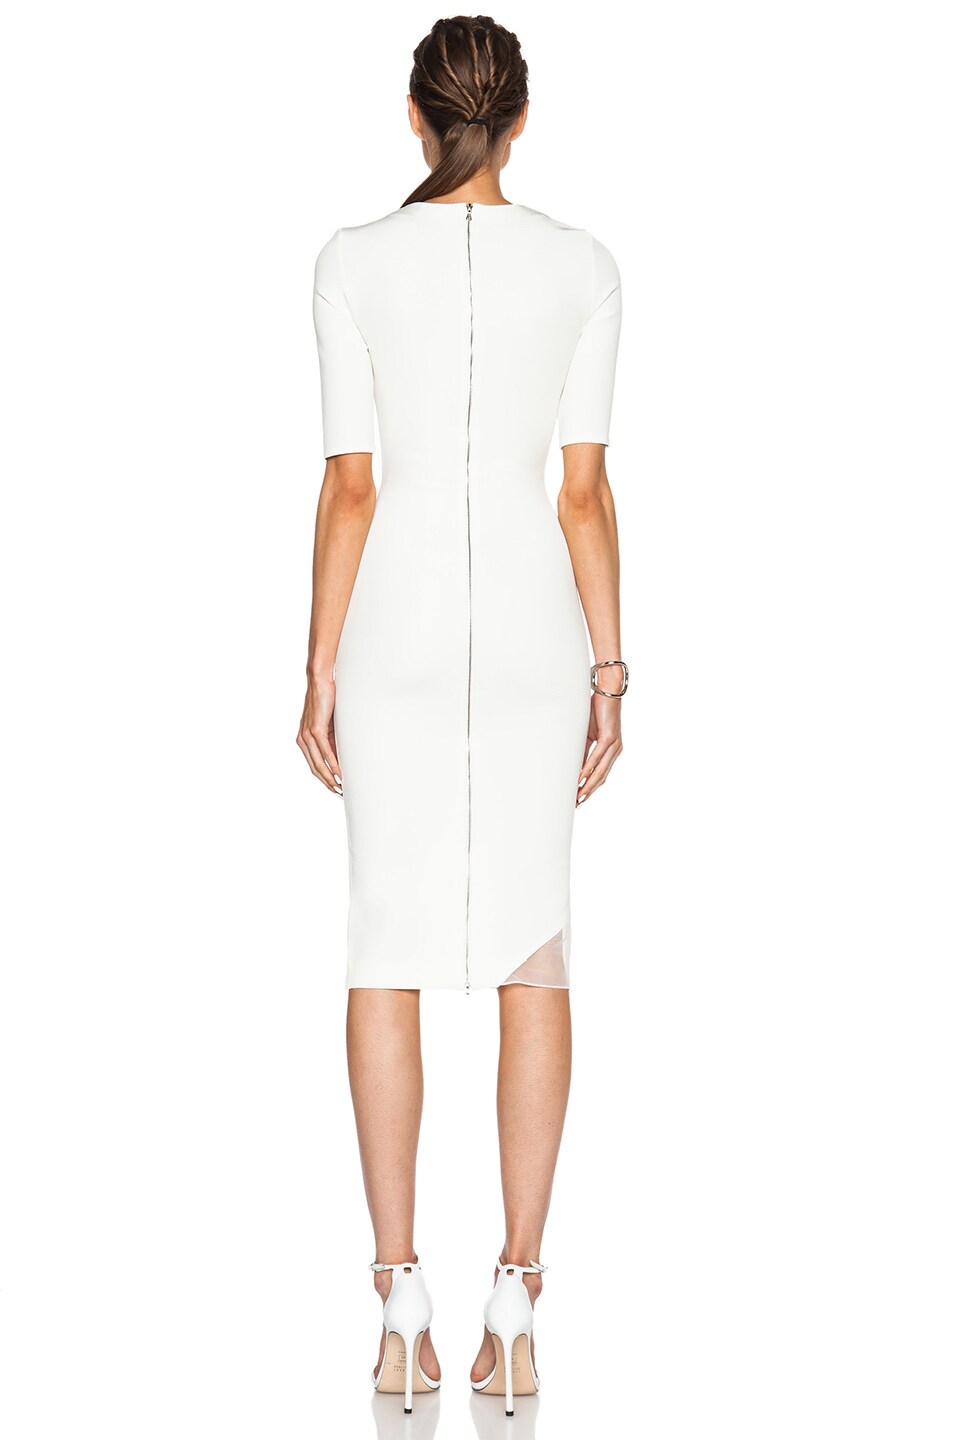 David Koma Short Sleeve Net Insert Pencil Dress in White | FWRD